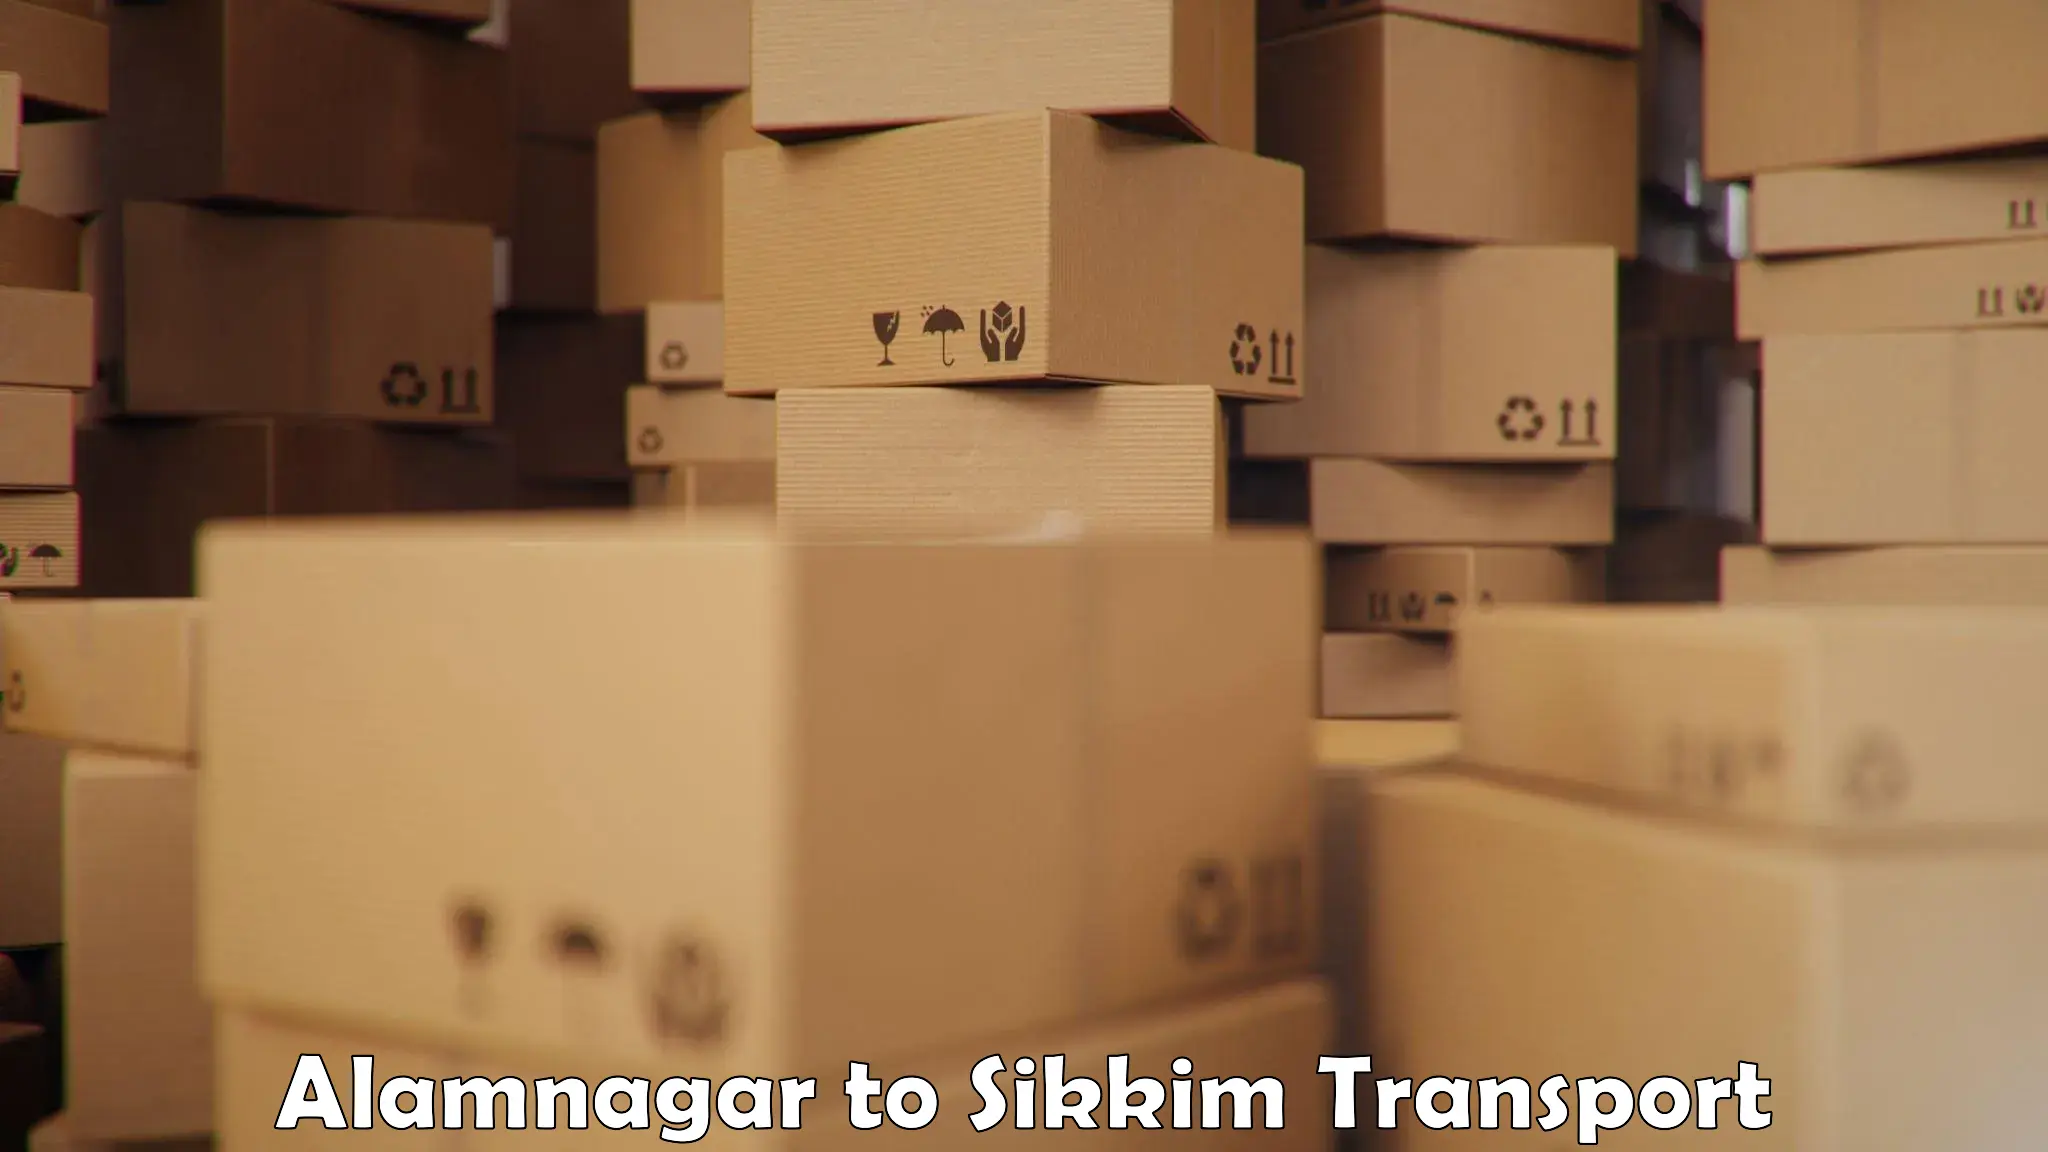 Shipping partner Alamnagar to Rangpo